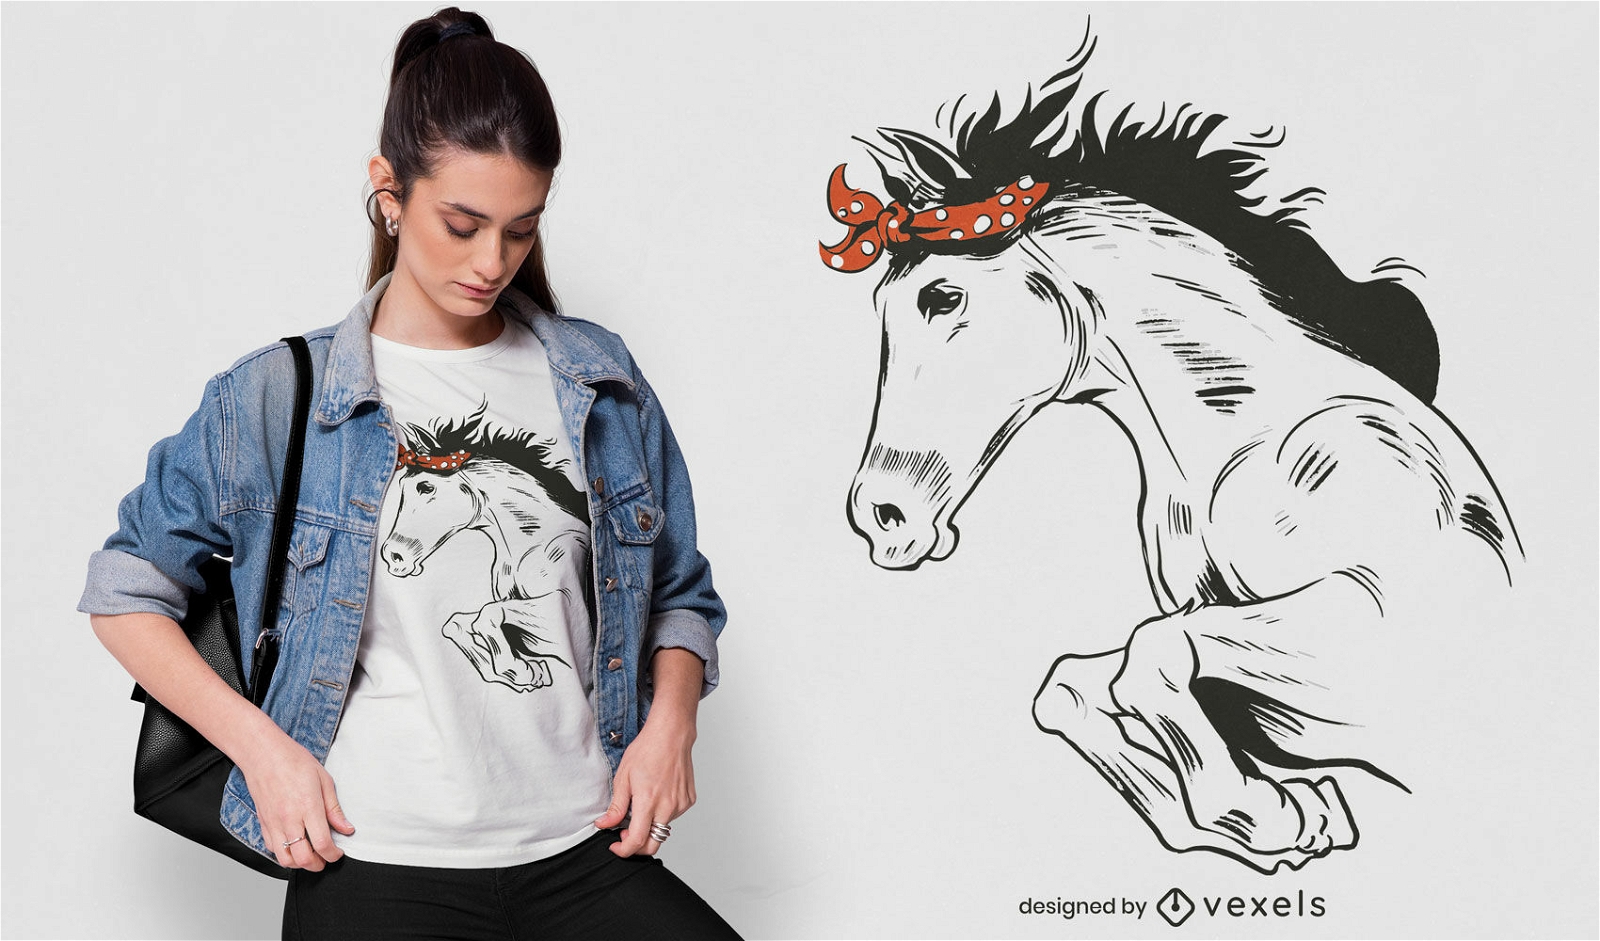 Bandana horse t-shirt design